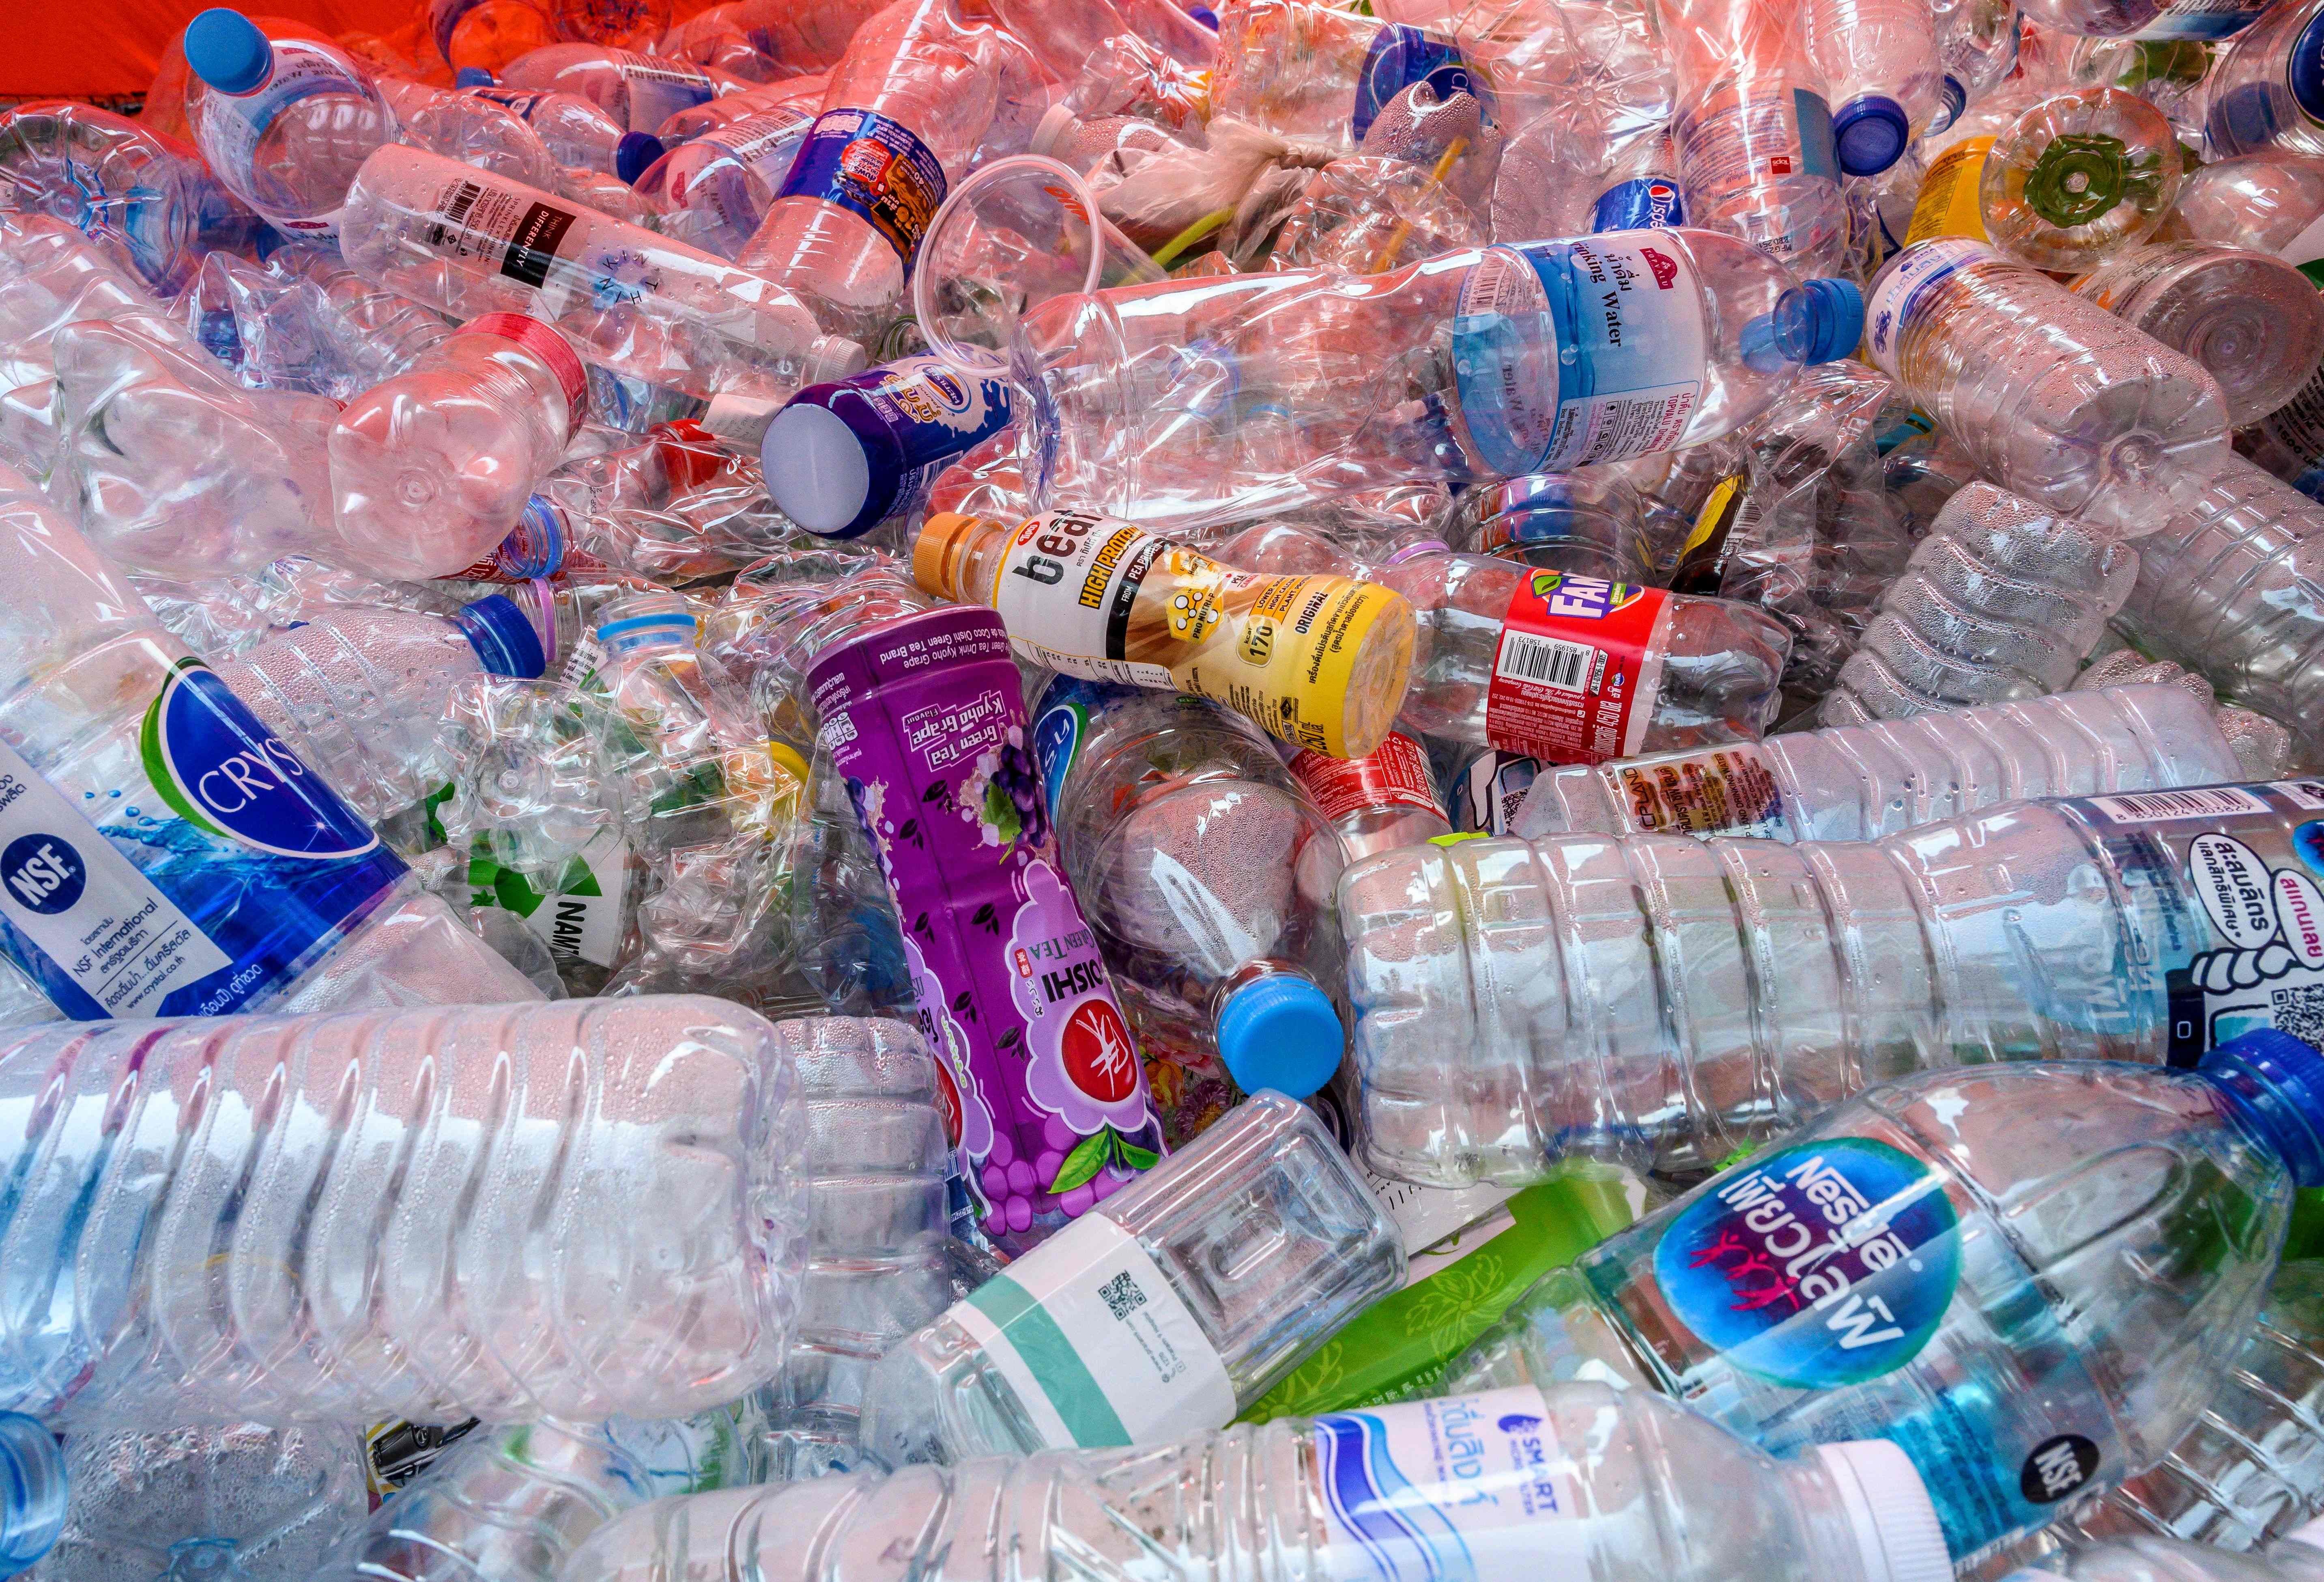 Plastic Bottle Pollution Best Pictures And Decription Forwardsetcom